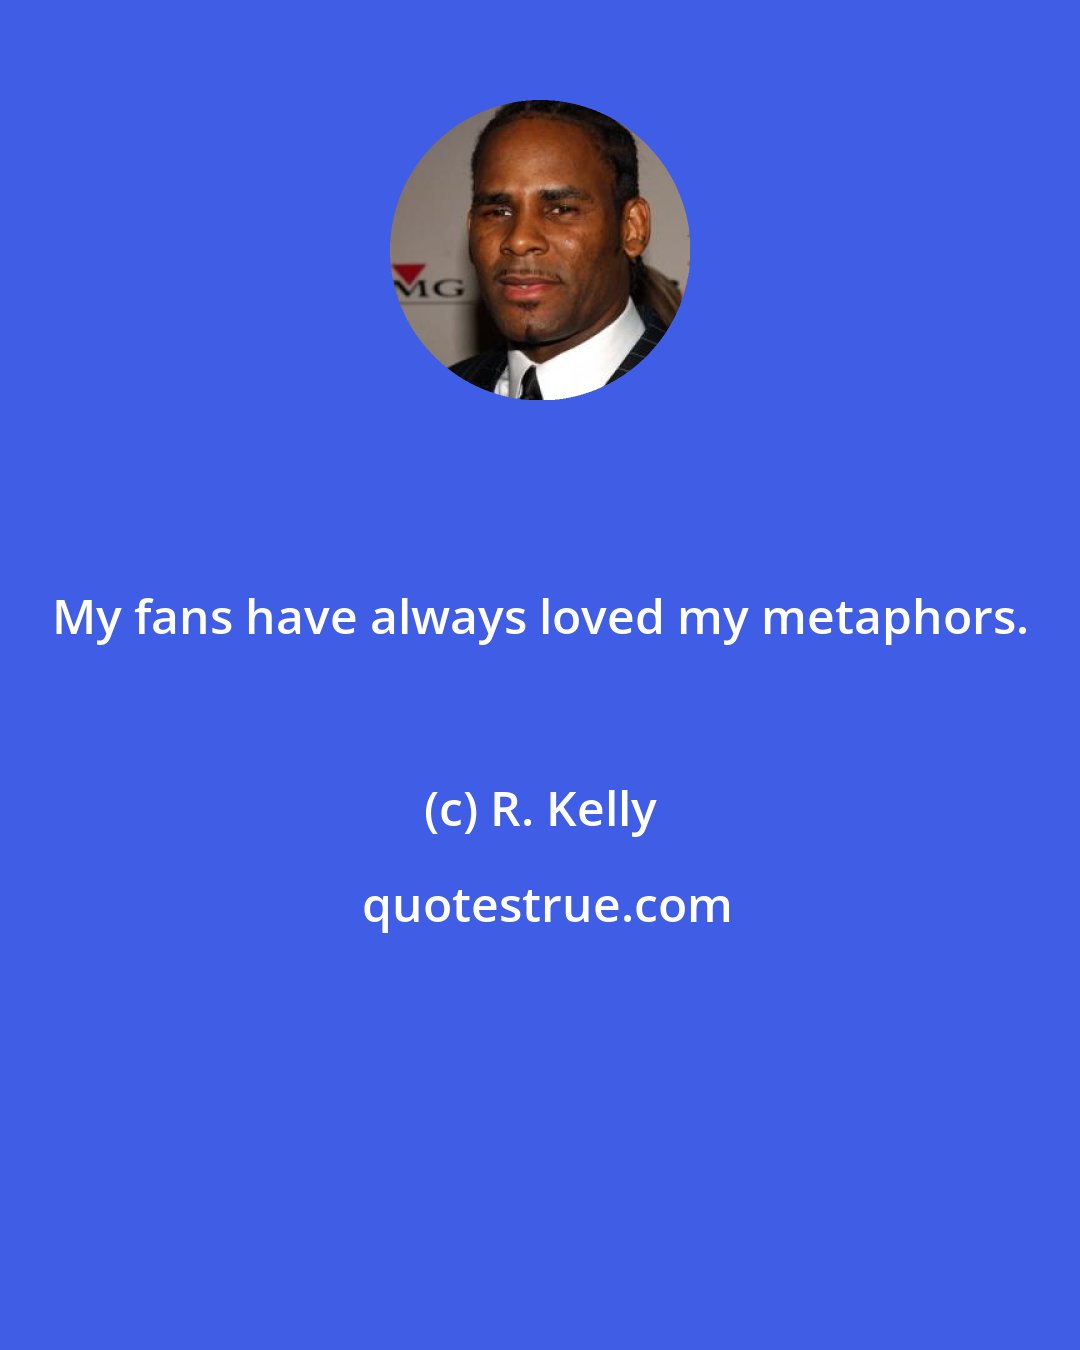 R. Kelly: My fans have always loved my metaphors.